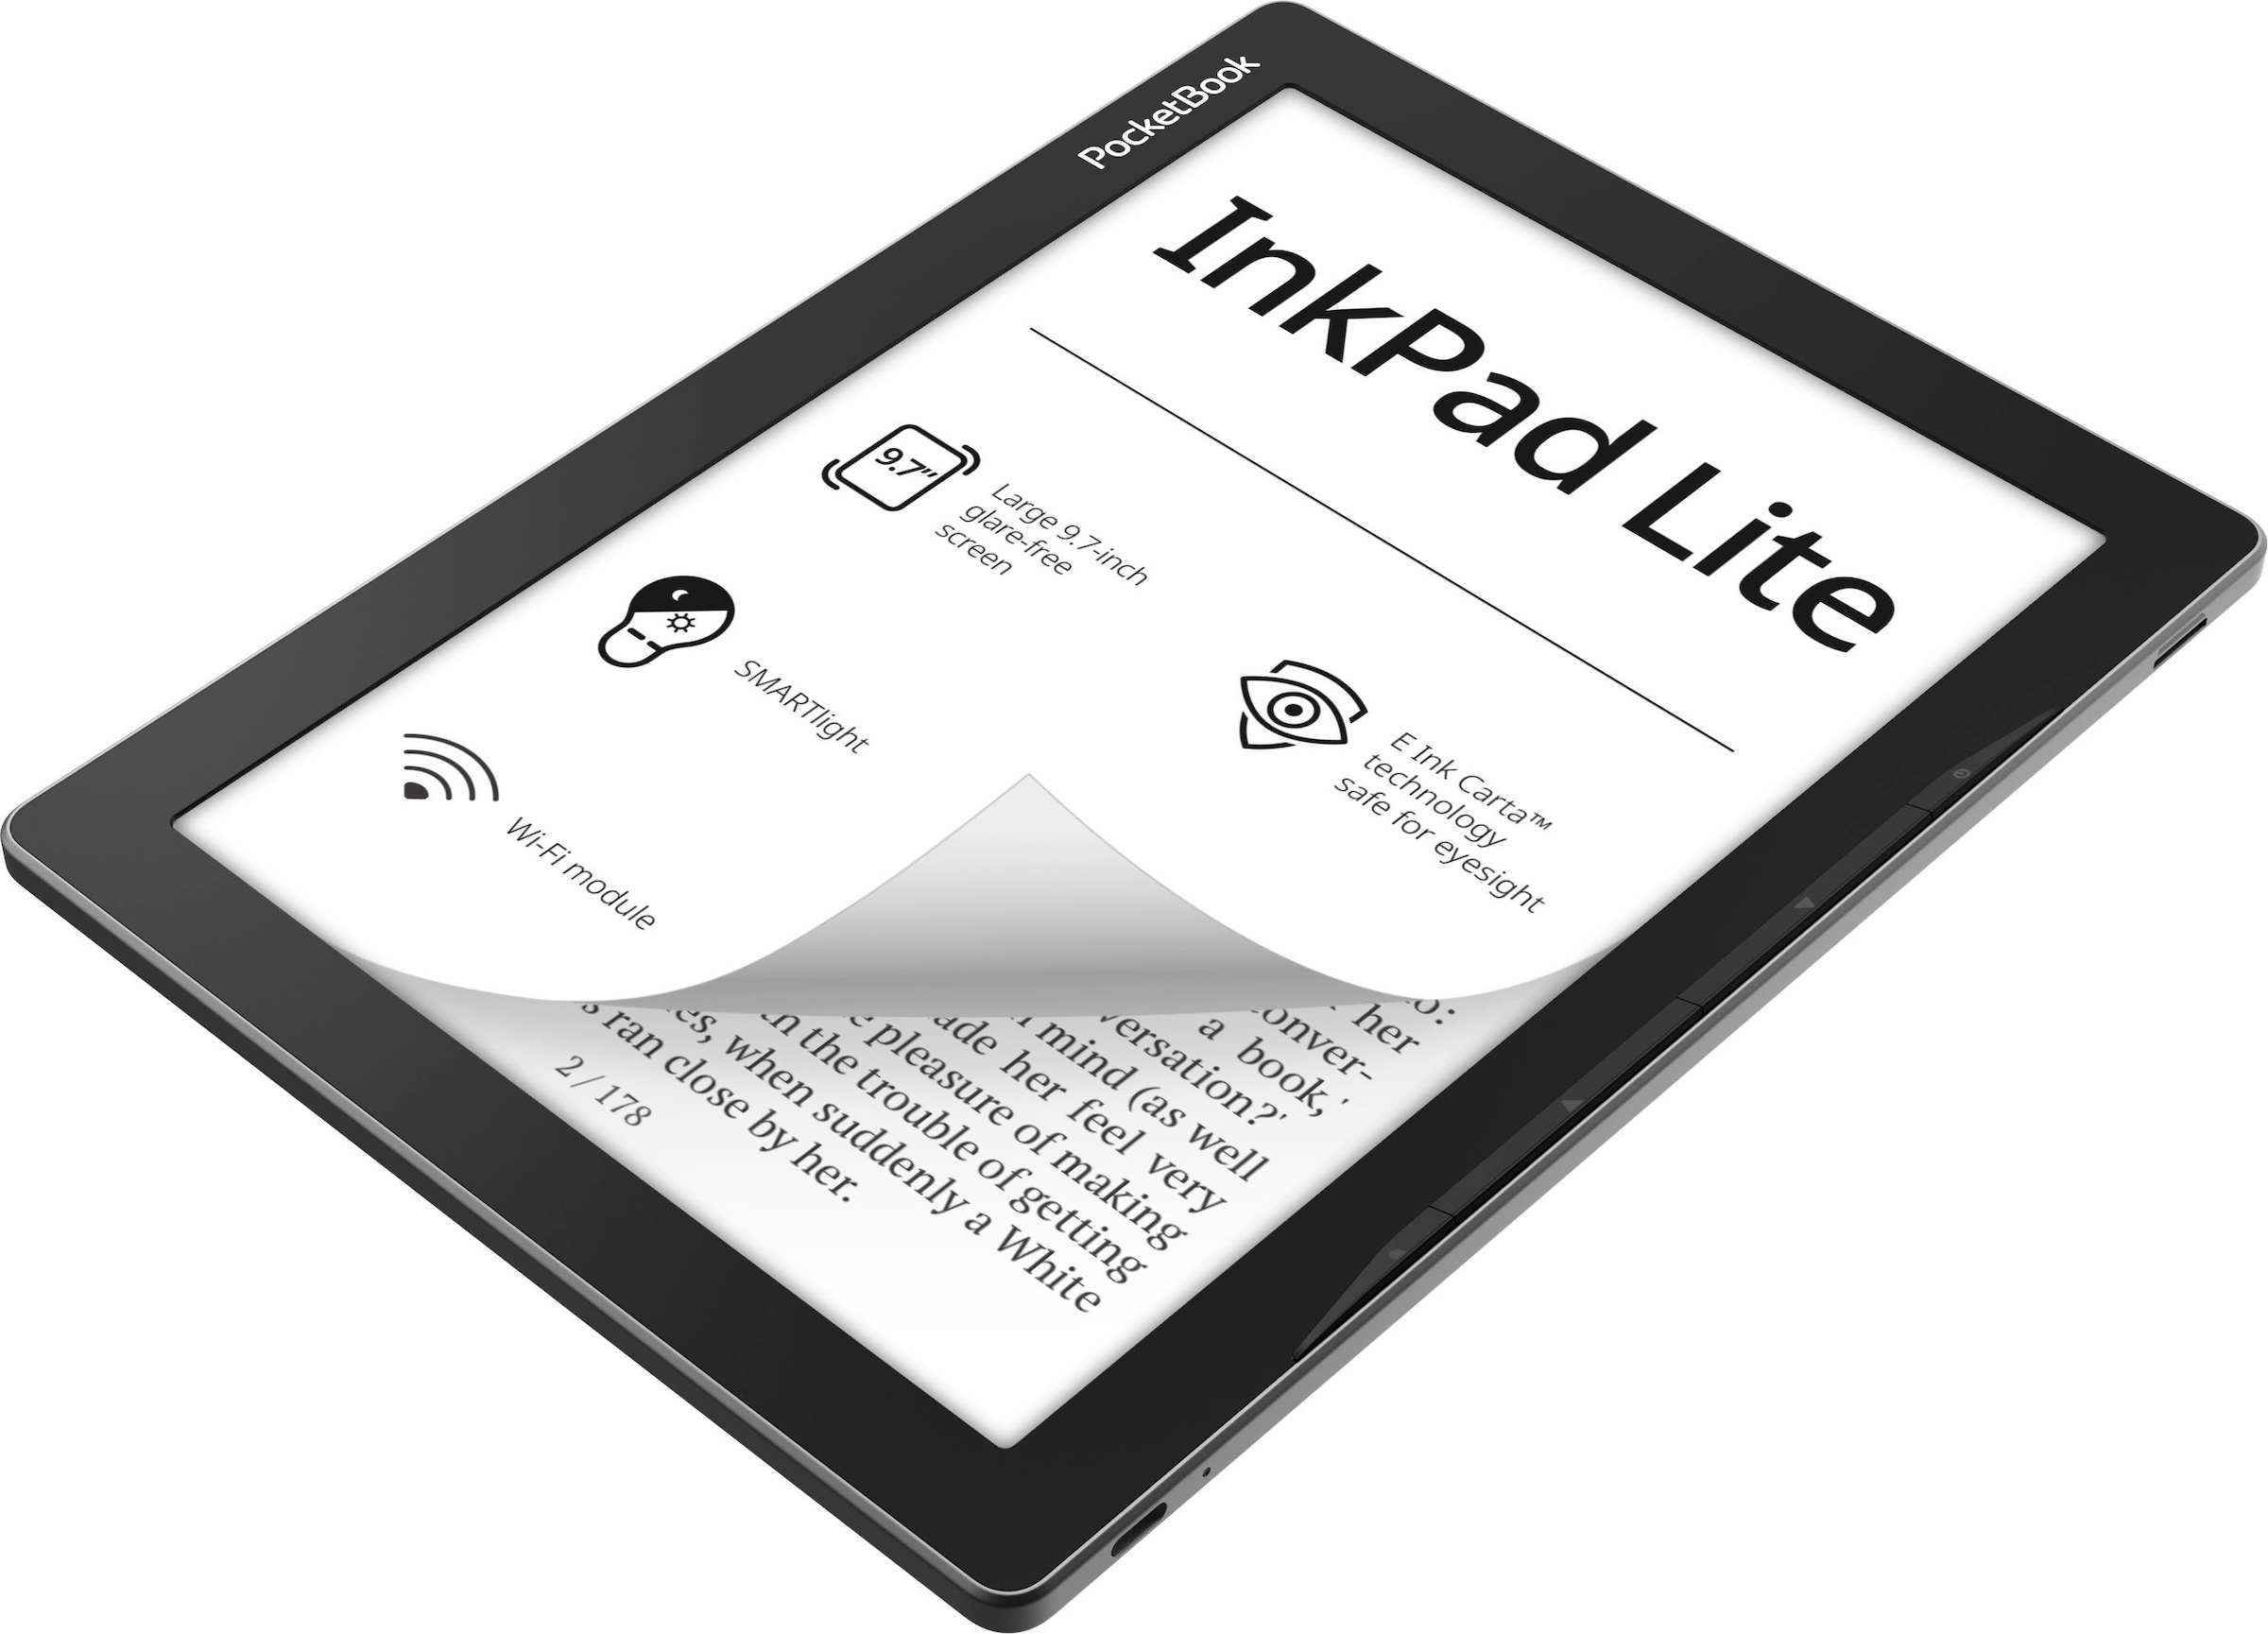 PocketBook E-Book »InkPad Lite«, (Linux)